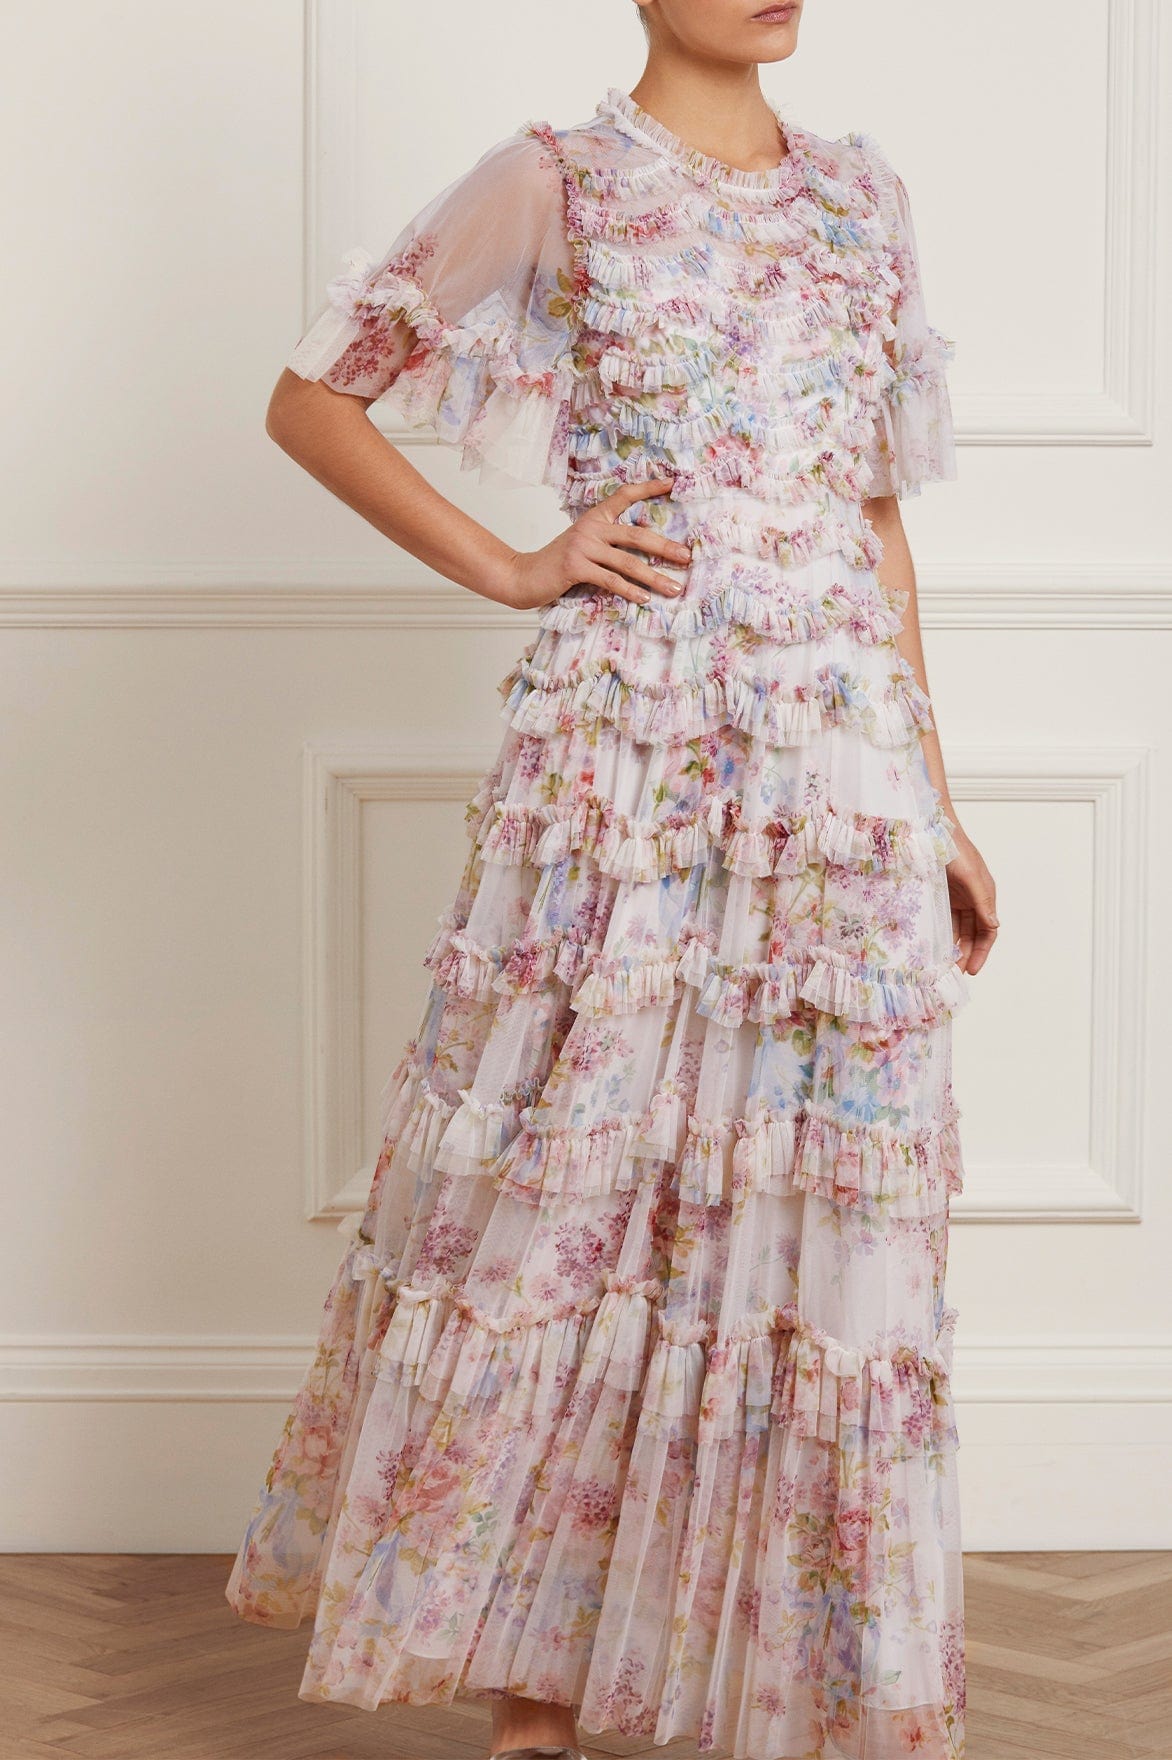 ruffled floral dress